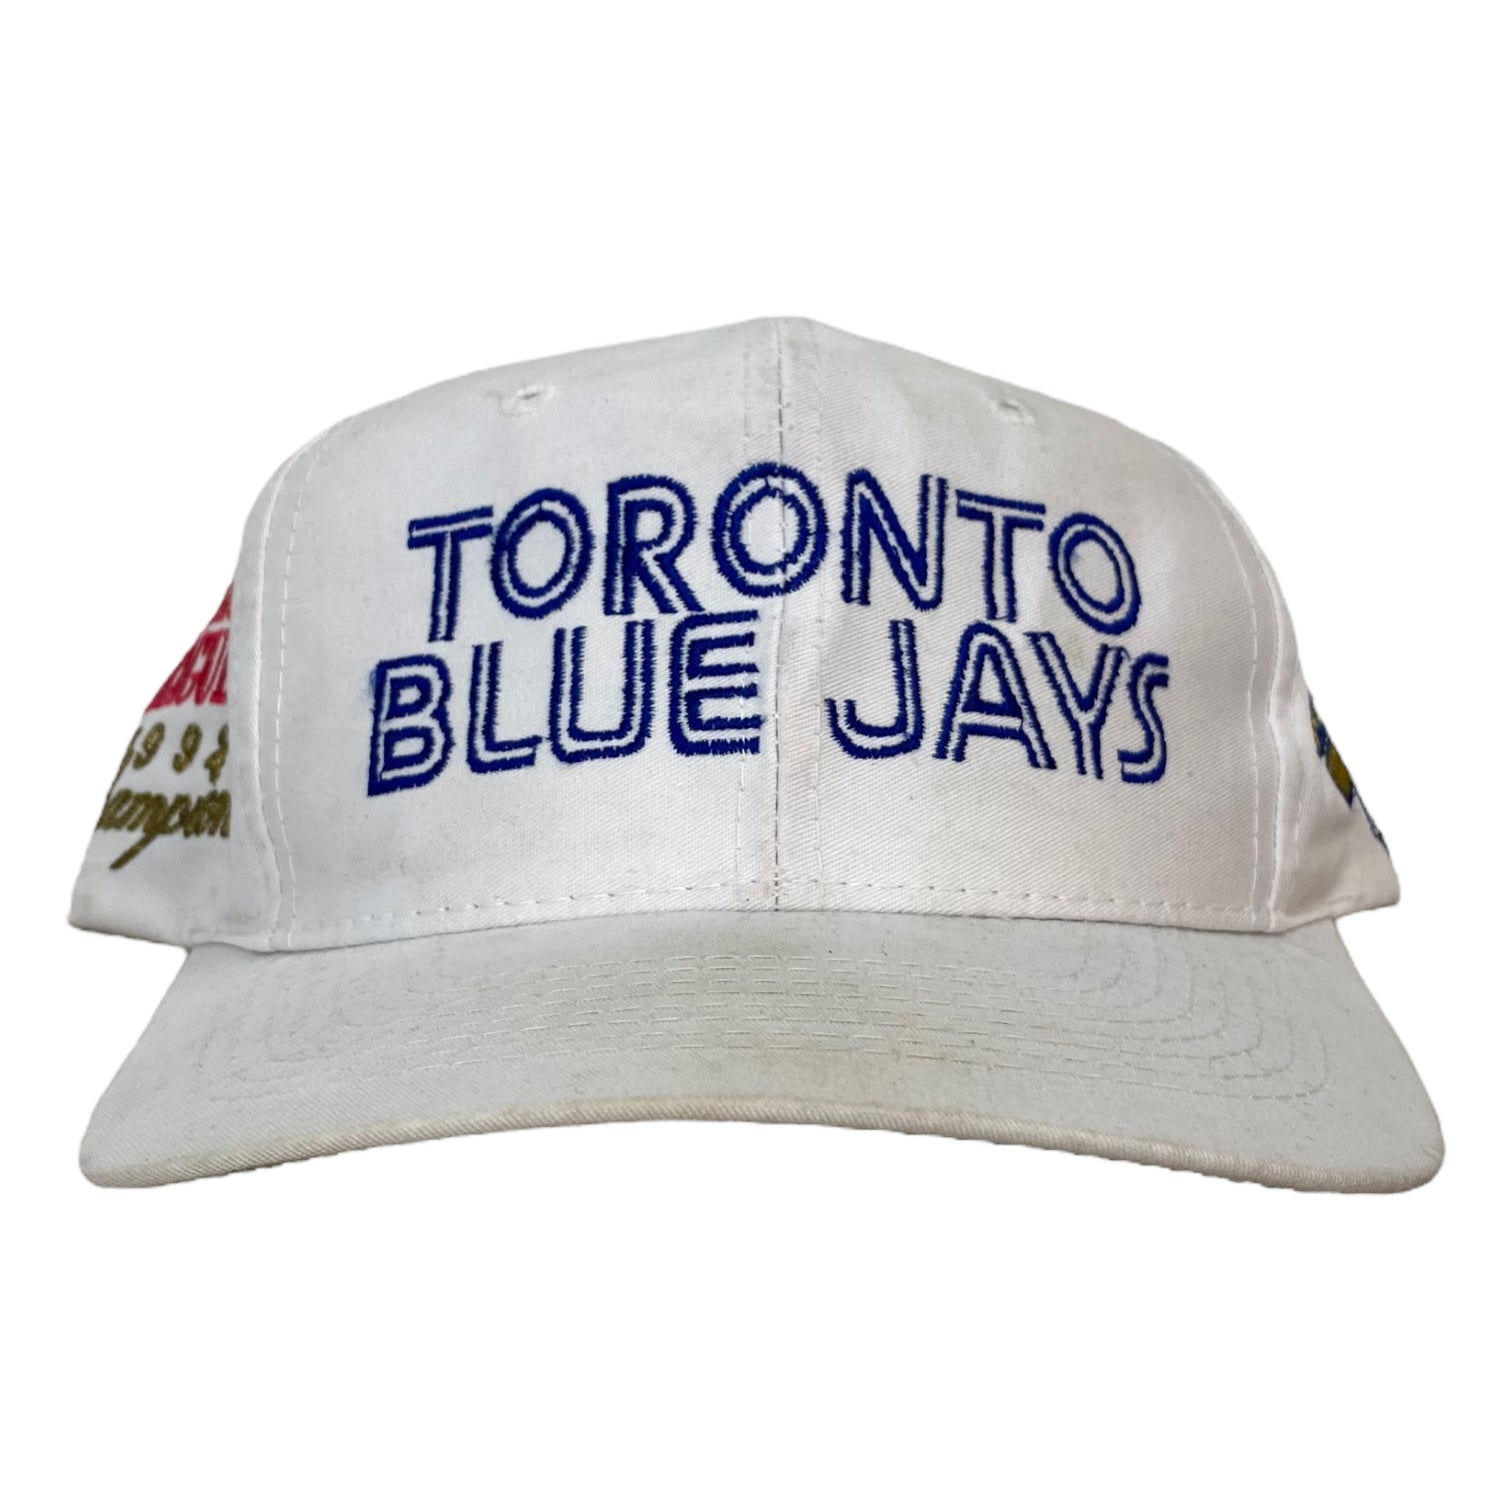 Vintage Toronto Blue Jays Snapback White